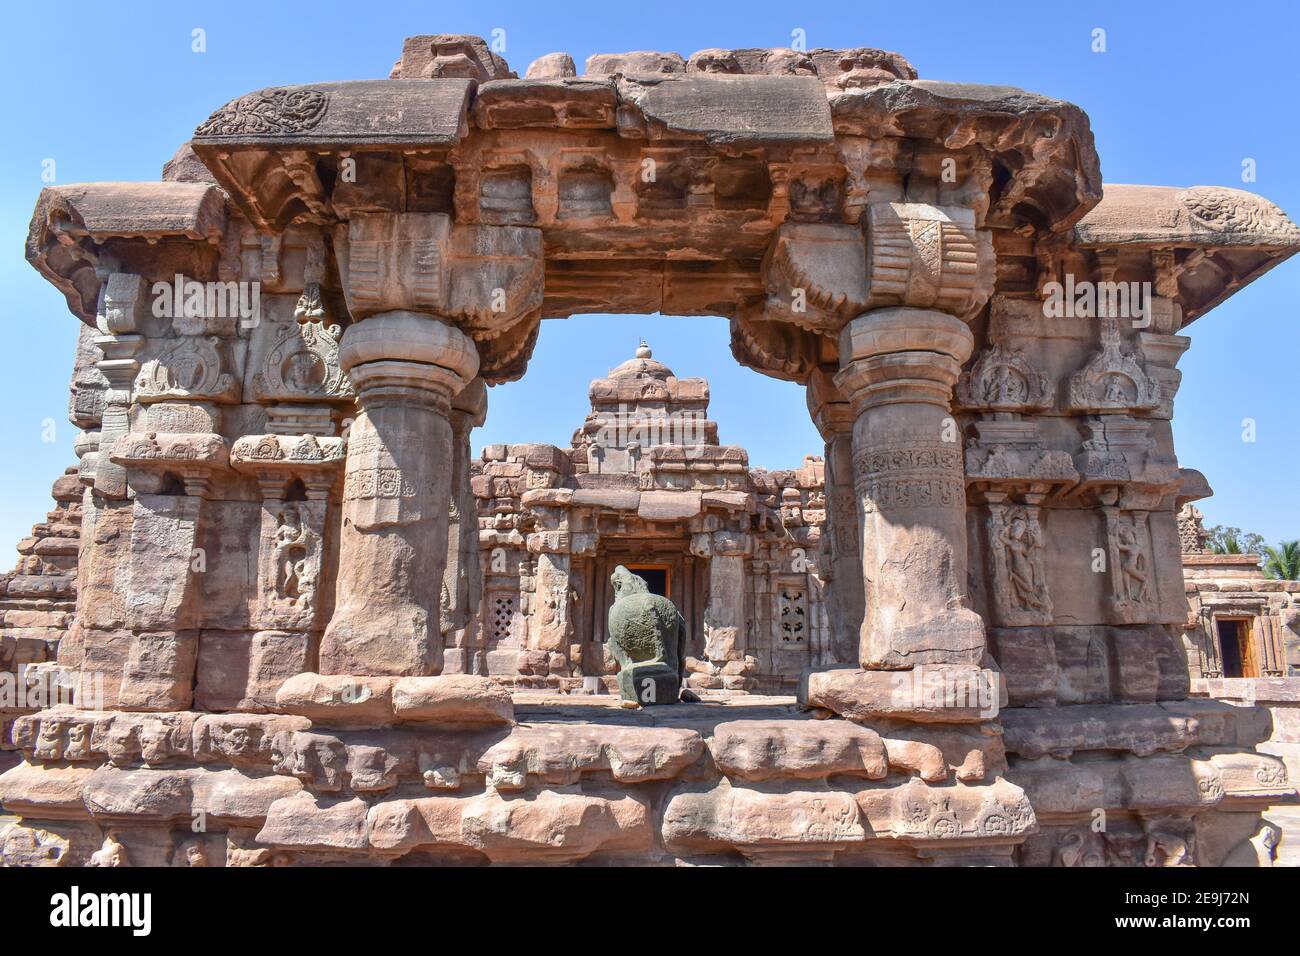 Pattadakal temple .South Indian temples with Indian rock cut architecture in karnataka near Badami city . Stock Photo